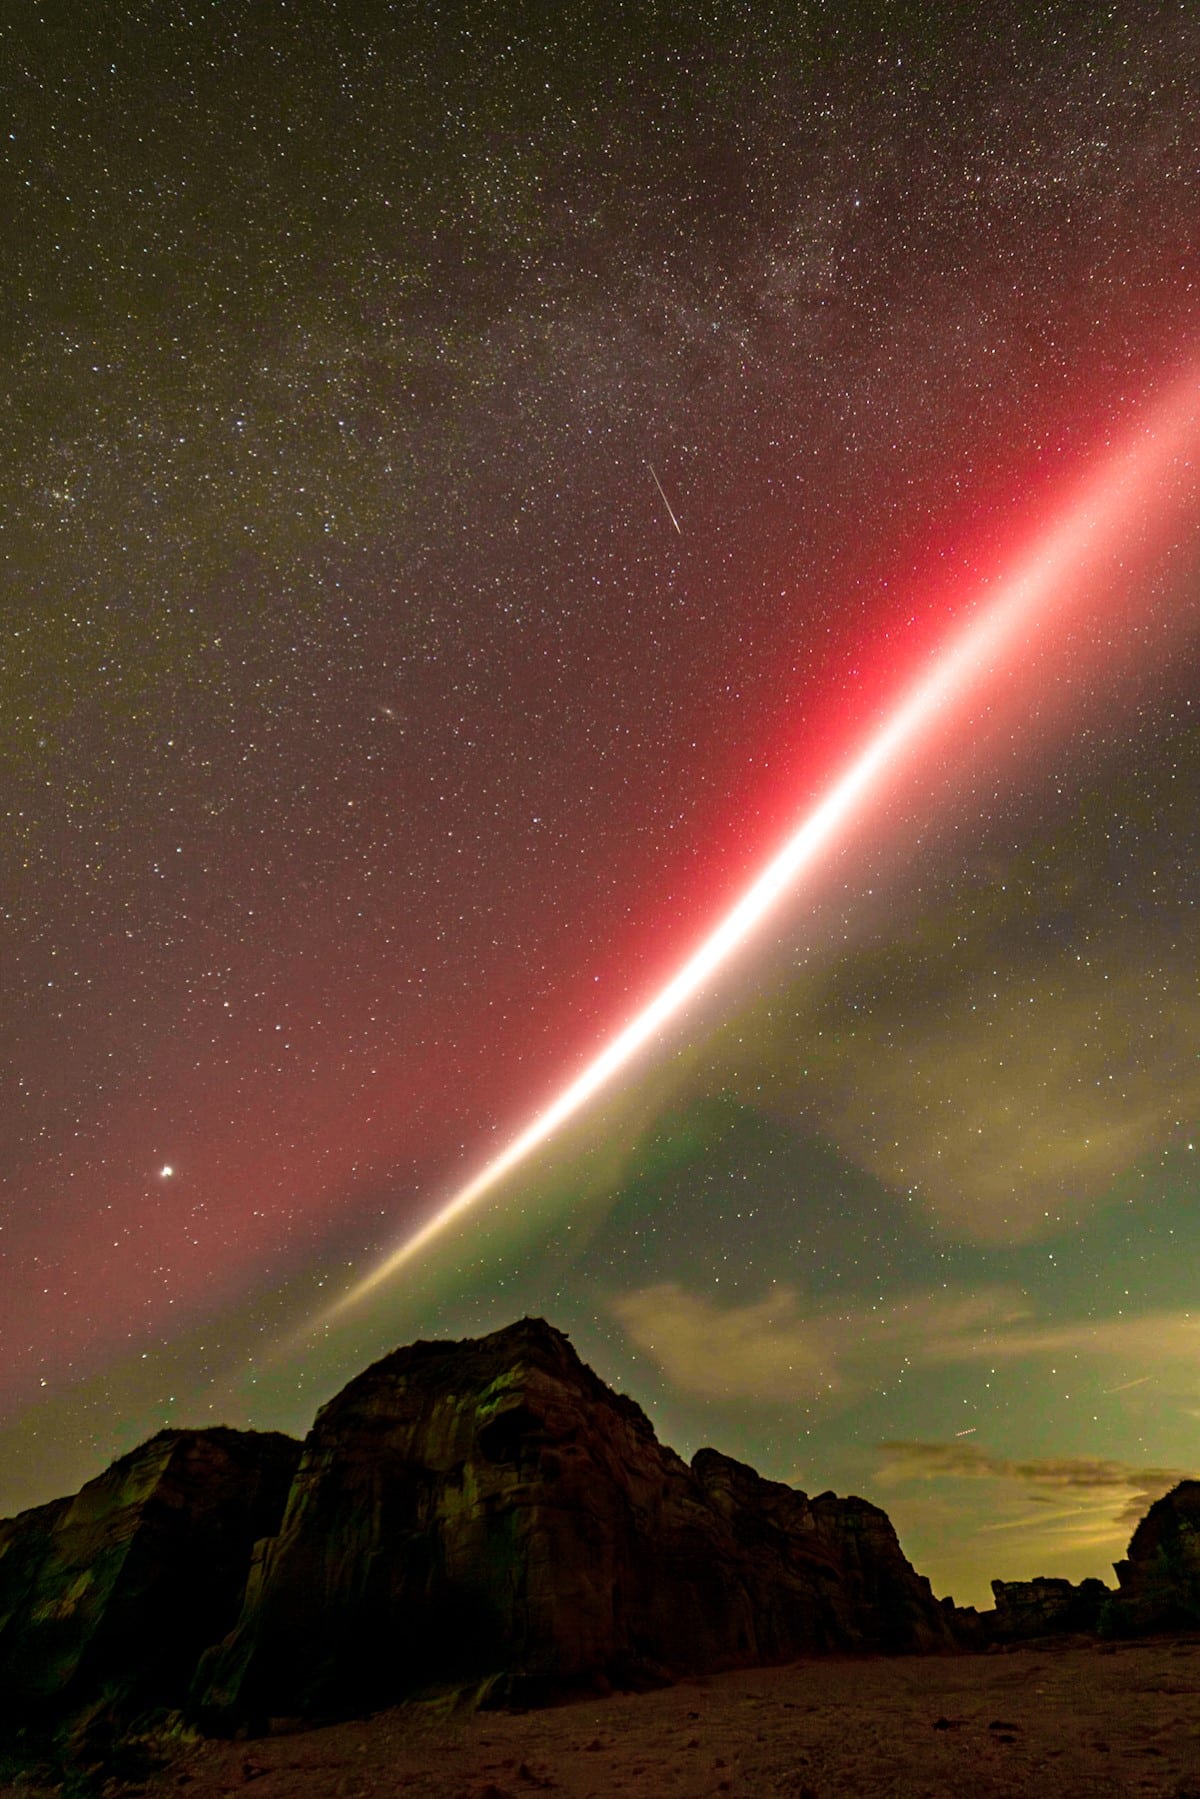 STEVE, Aurora borealis, Milky Way photographed by Stephen Pemberton